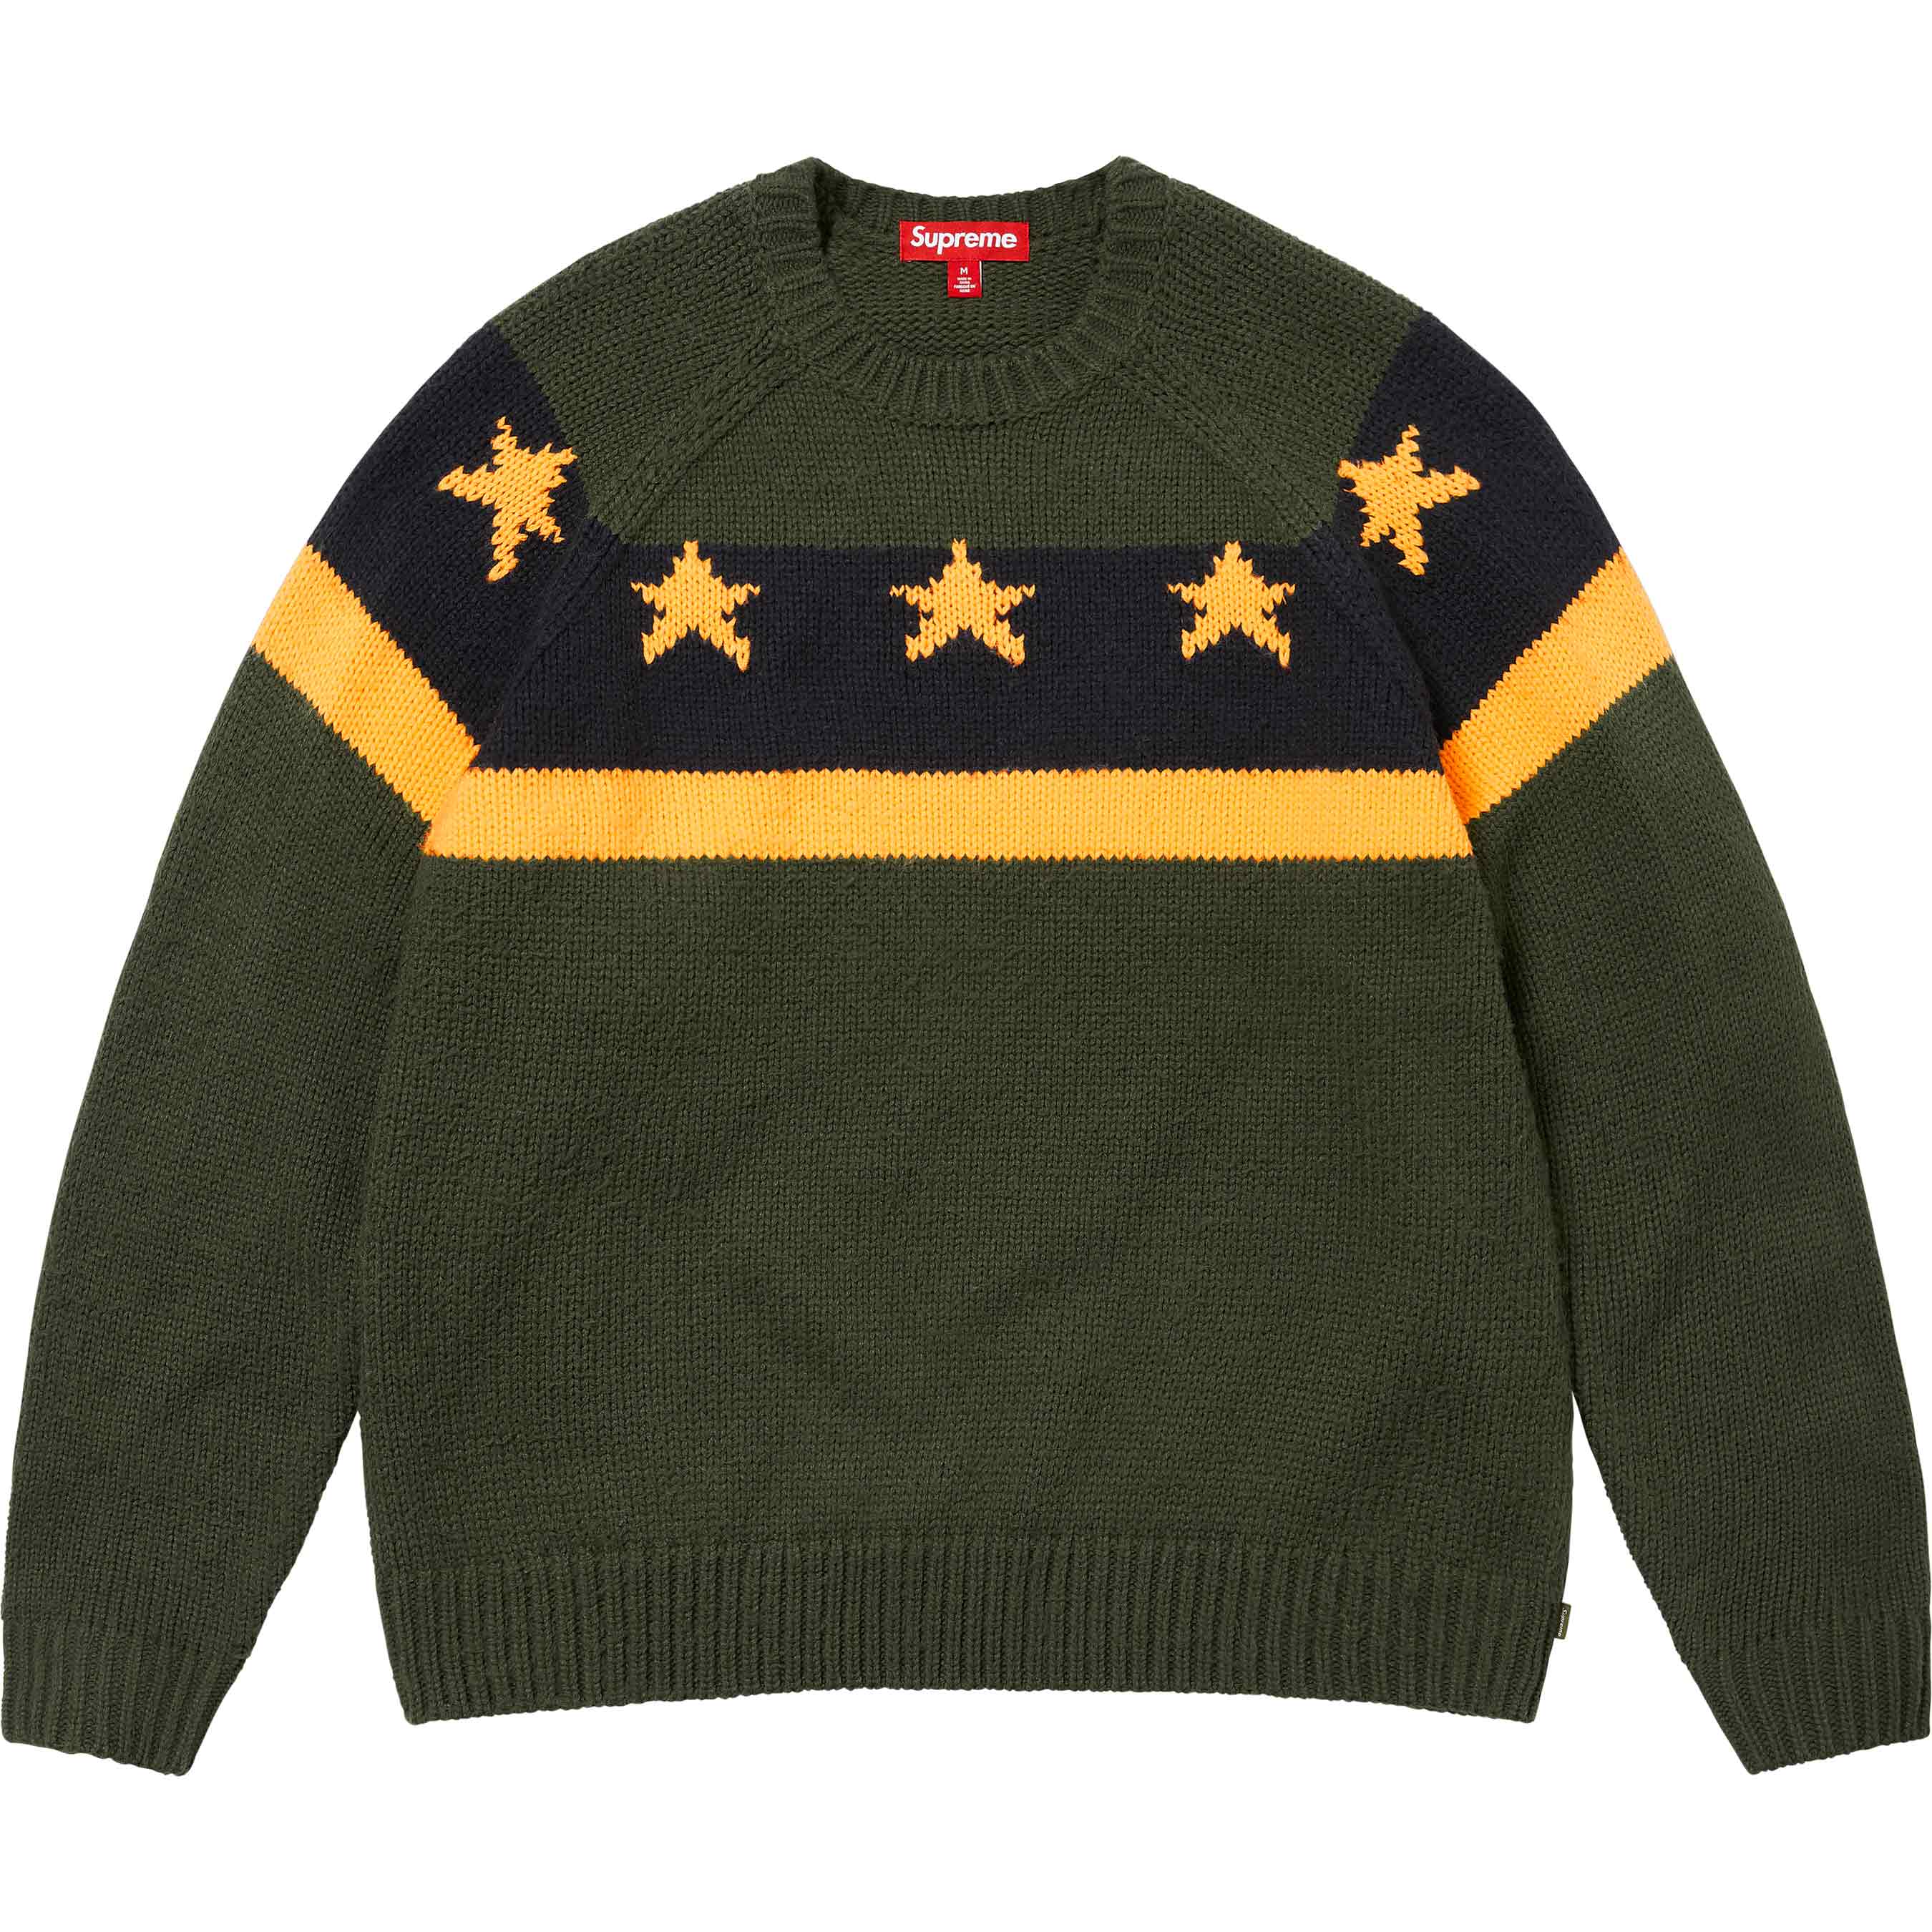 Stars Sweater - Shop - Supreme